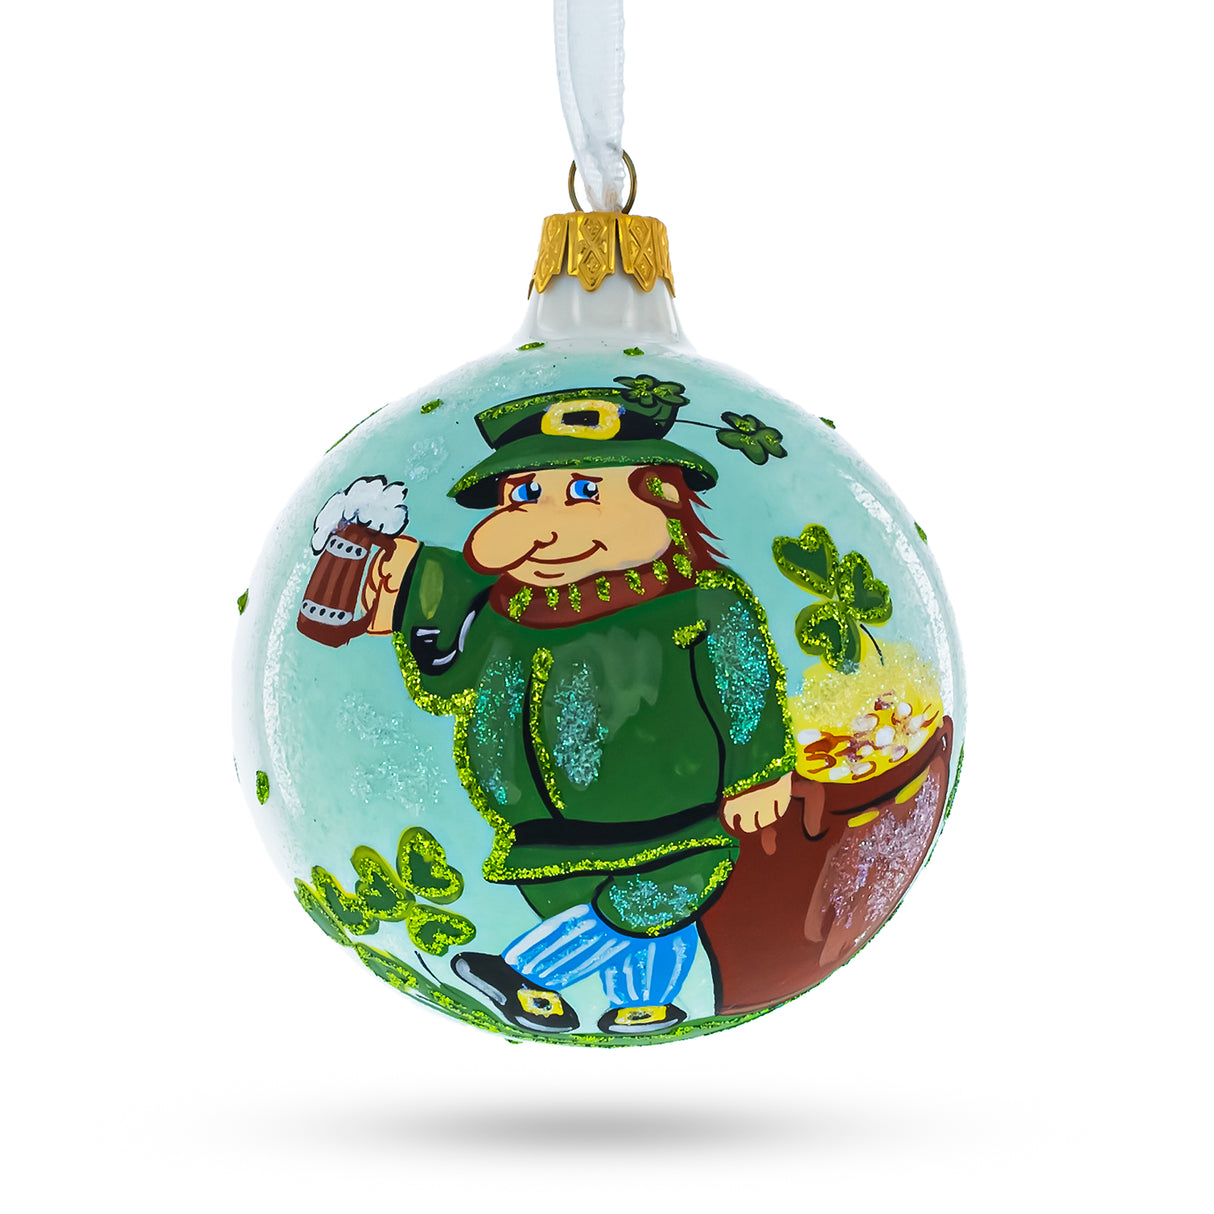 Glass Charming Irish Leprechaun Blown Glass Christmas Ornament 4 Inches in Multi color Round